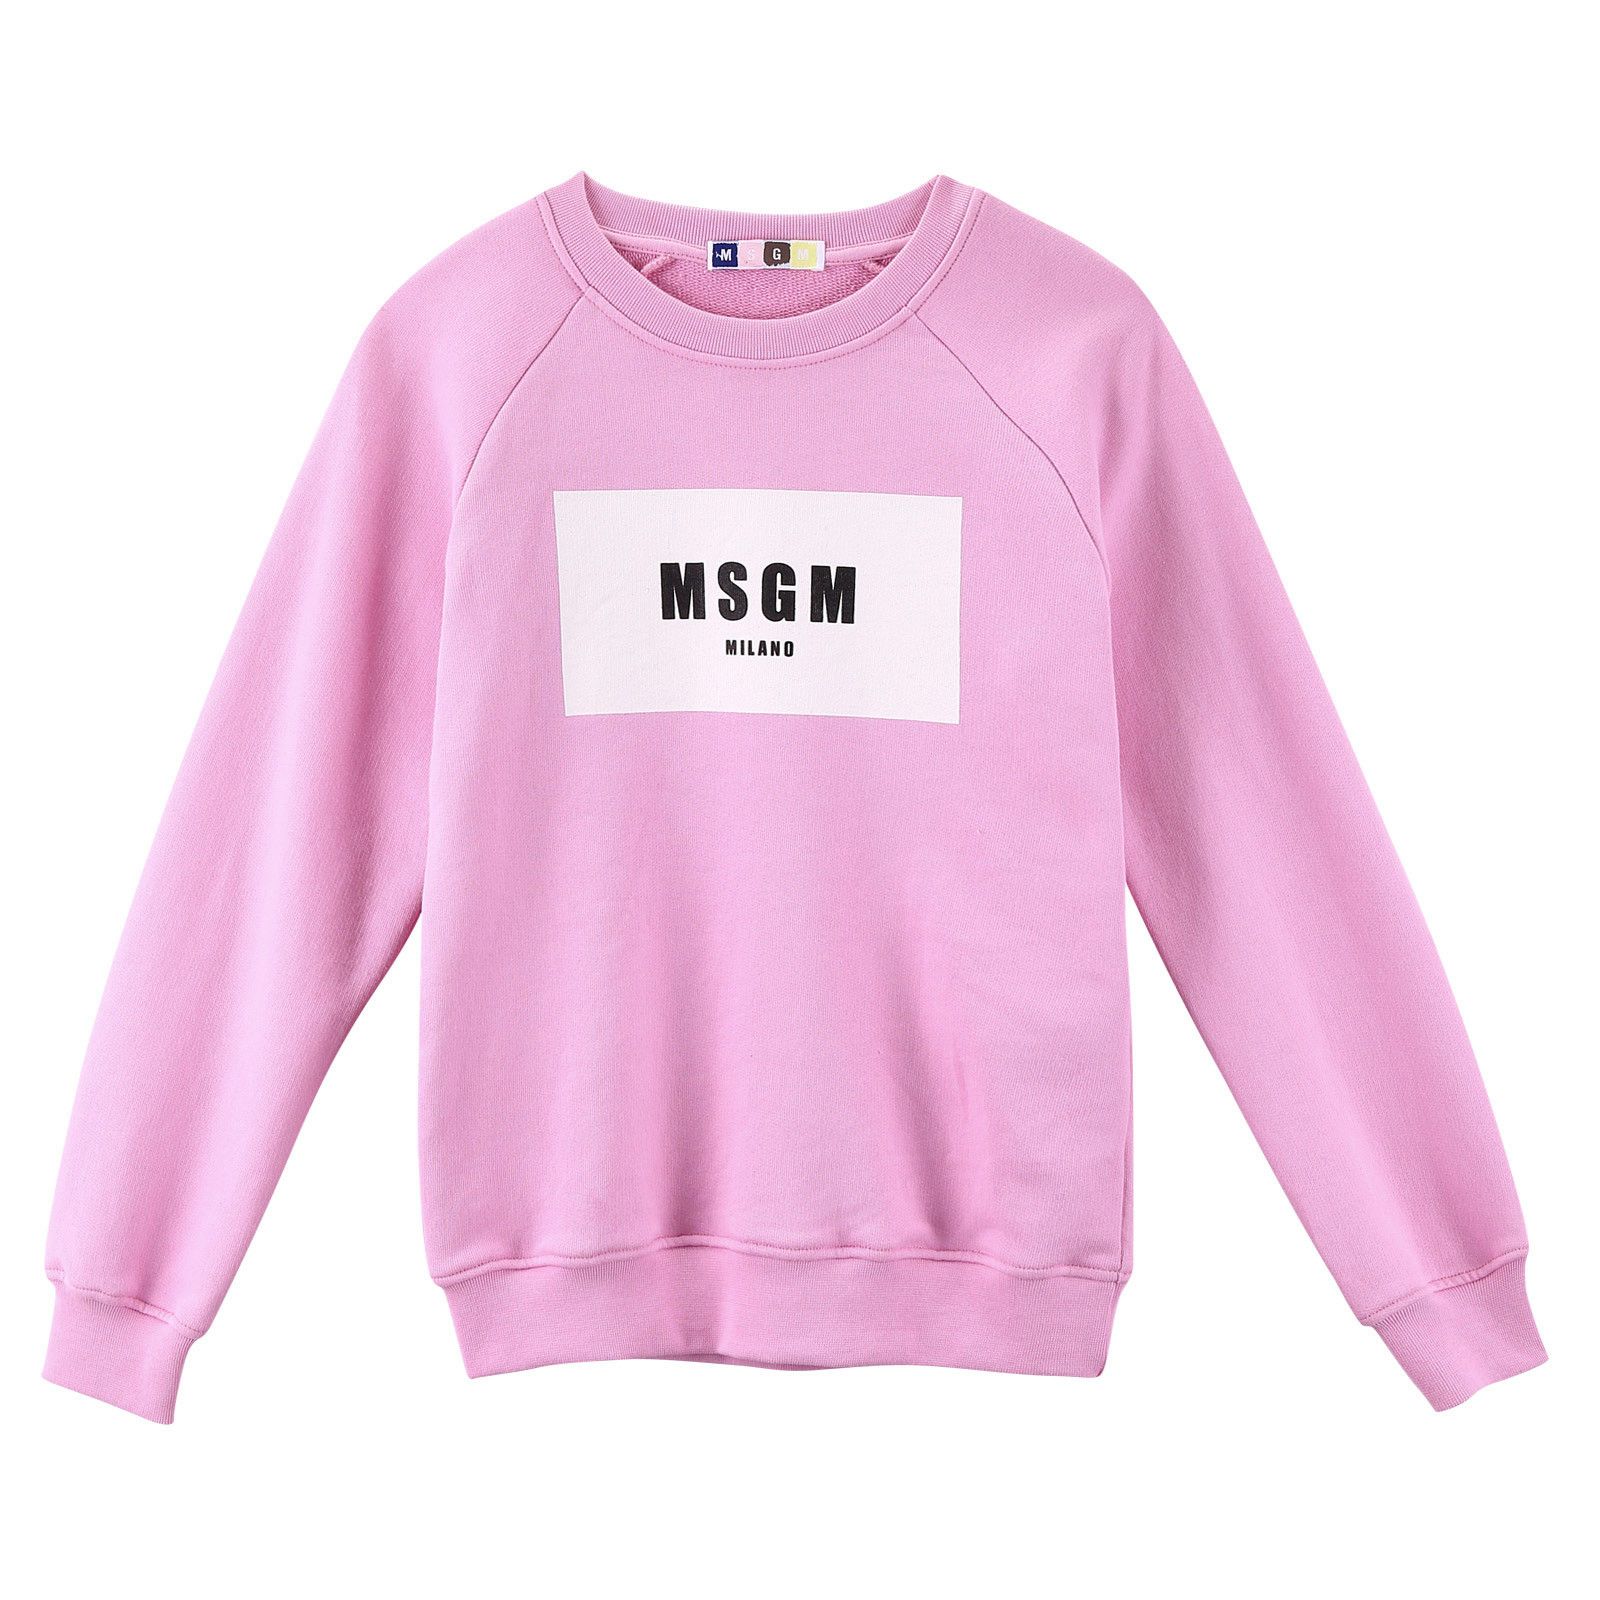 Girls Pink Cotton Sweatshirt With White Brand Logo - CÉMAROSE | Children's Fashion Store - 1